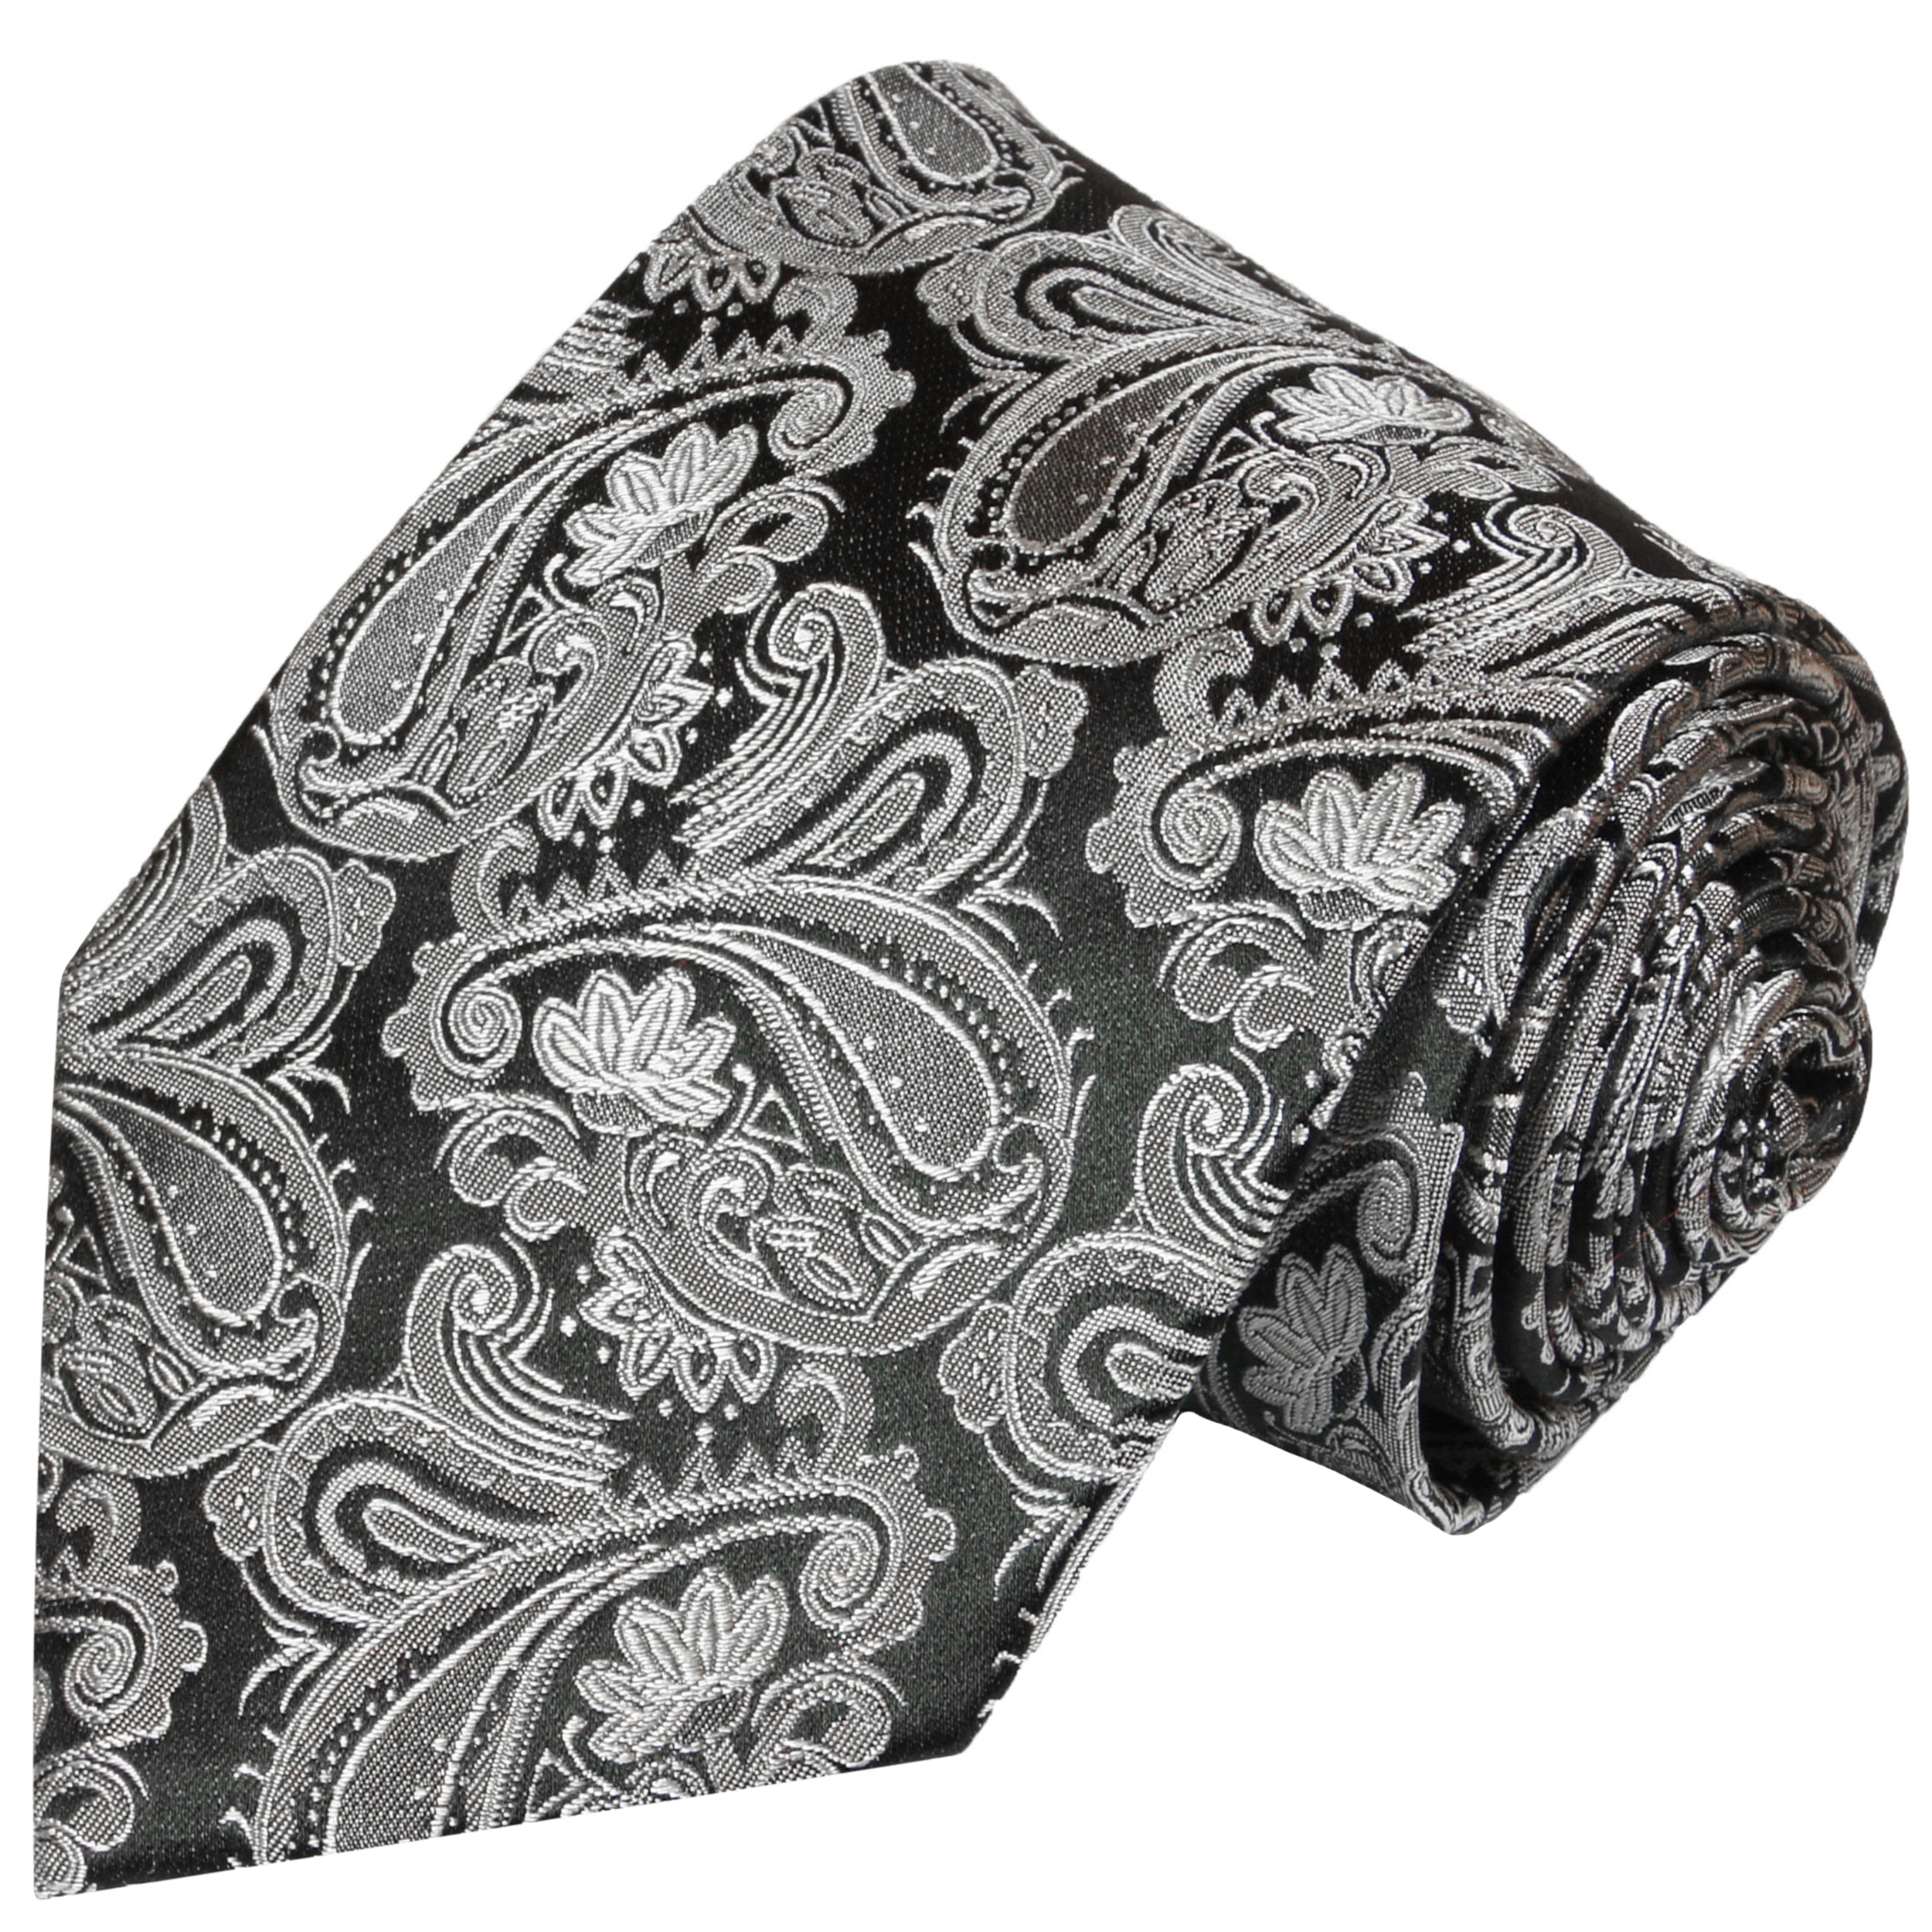 Krawatte grau schwarz Shop BESTELLEN Paul Malone JETZT | - paisley